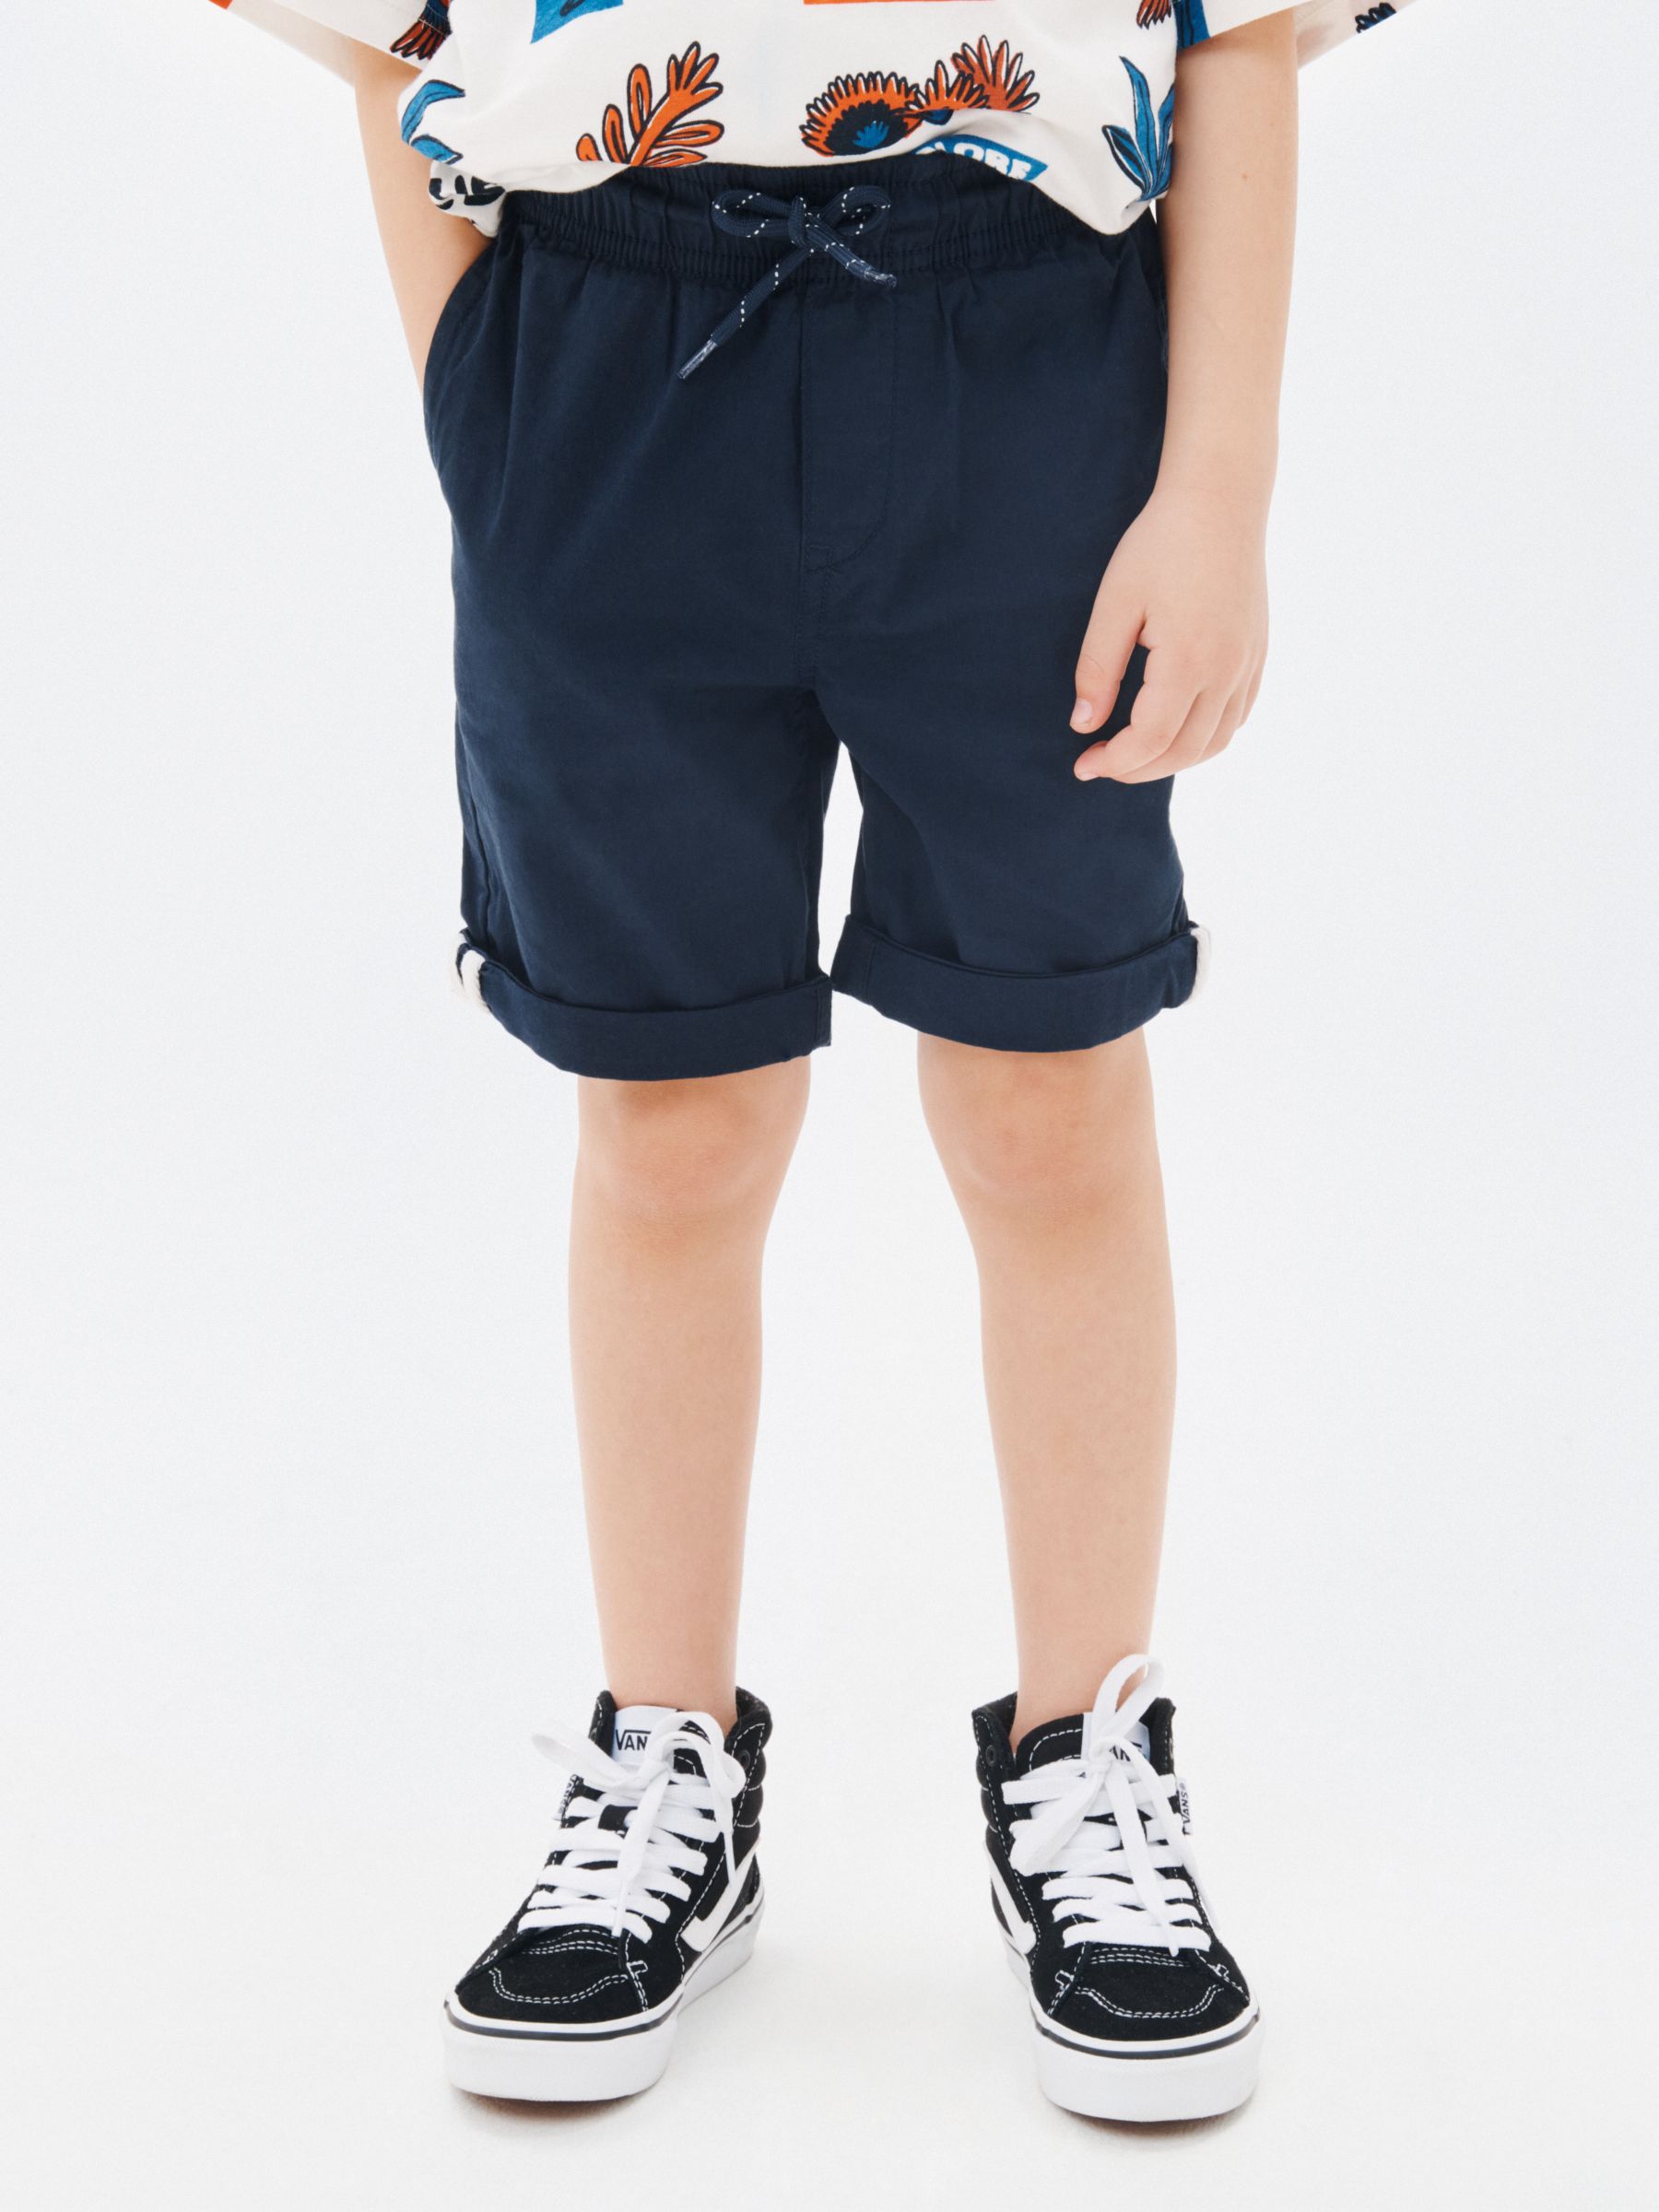 John Lewis Kids' Chino Shorts, Pack of 2, Multi, 7 years